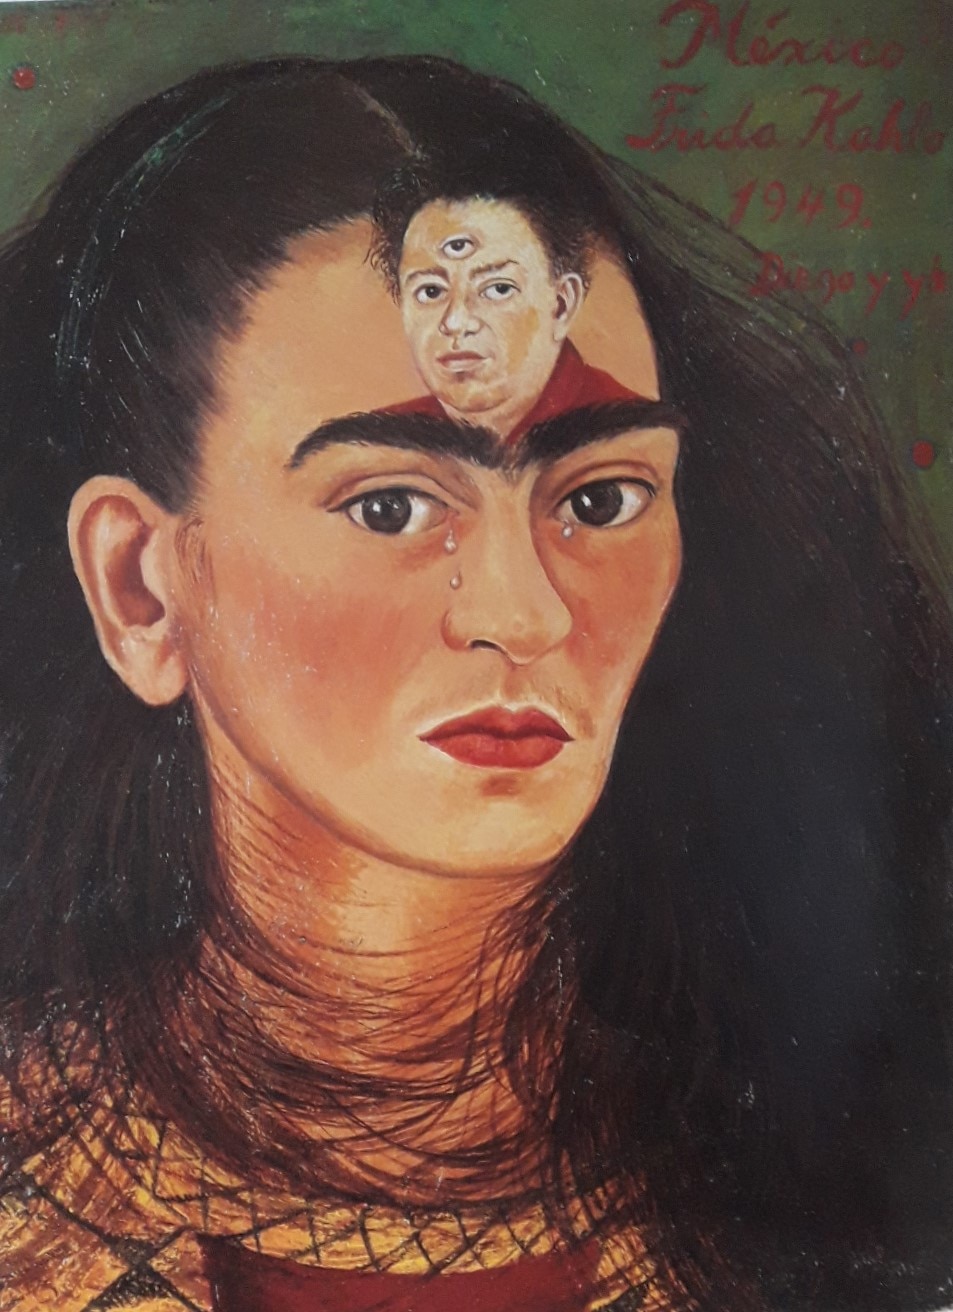 Obras de Frida Kahlo, Tomada del libro de la fundacion BBVA Bancomer 